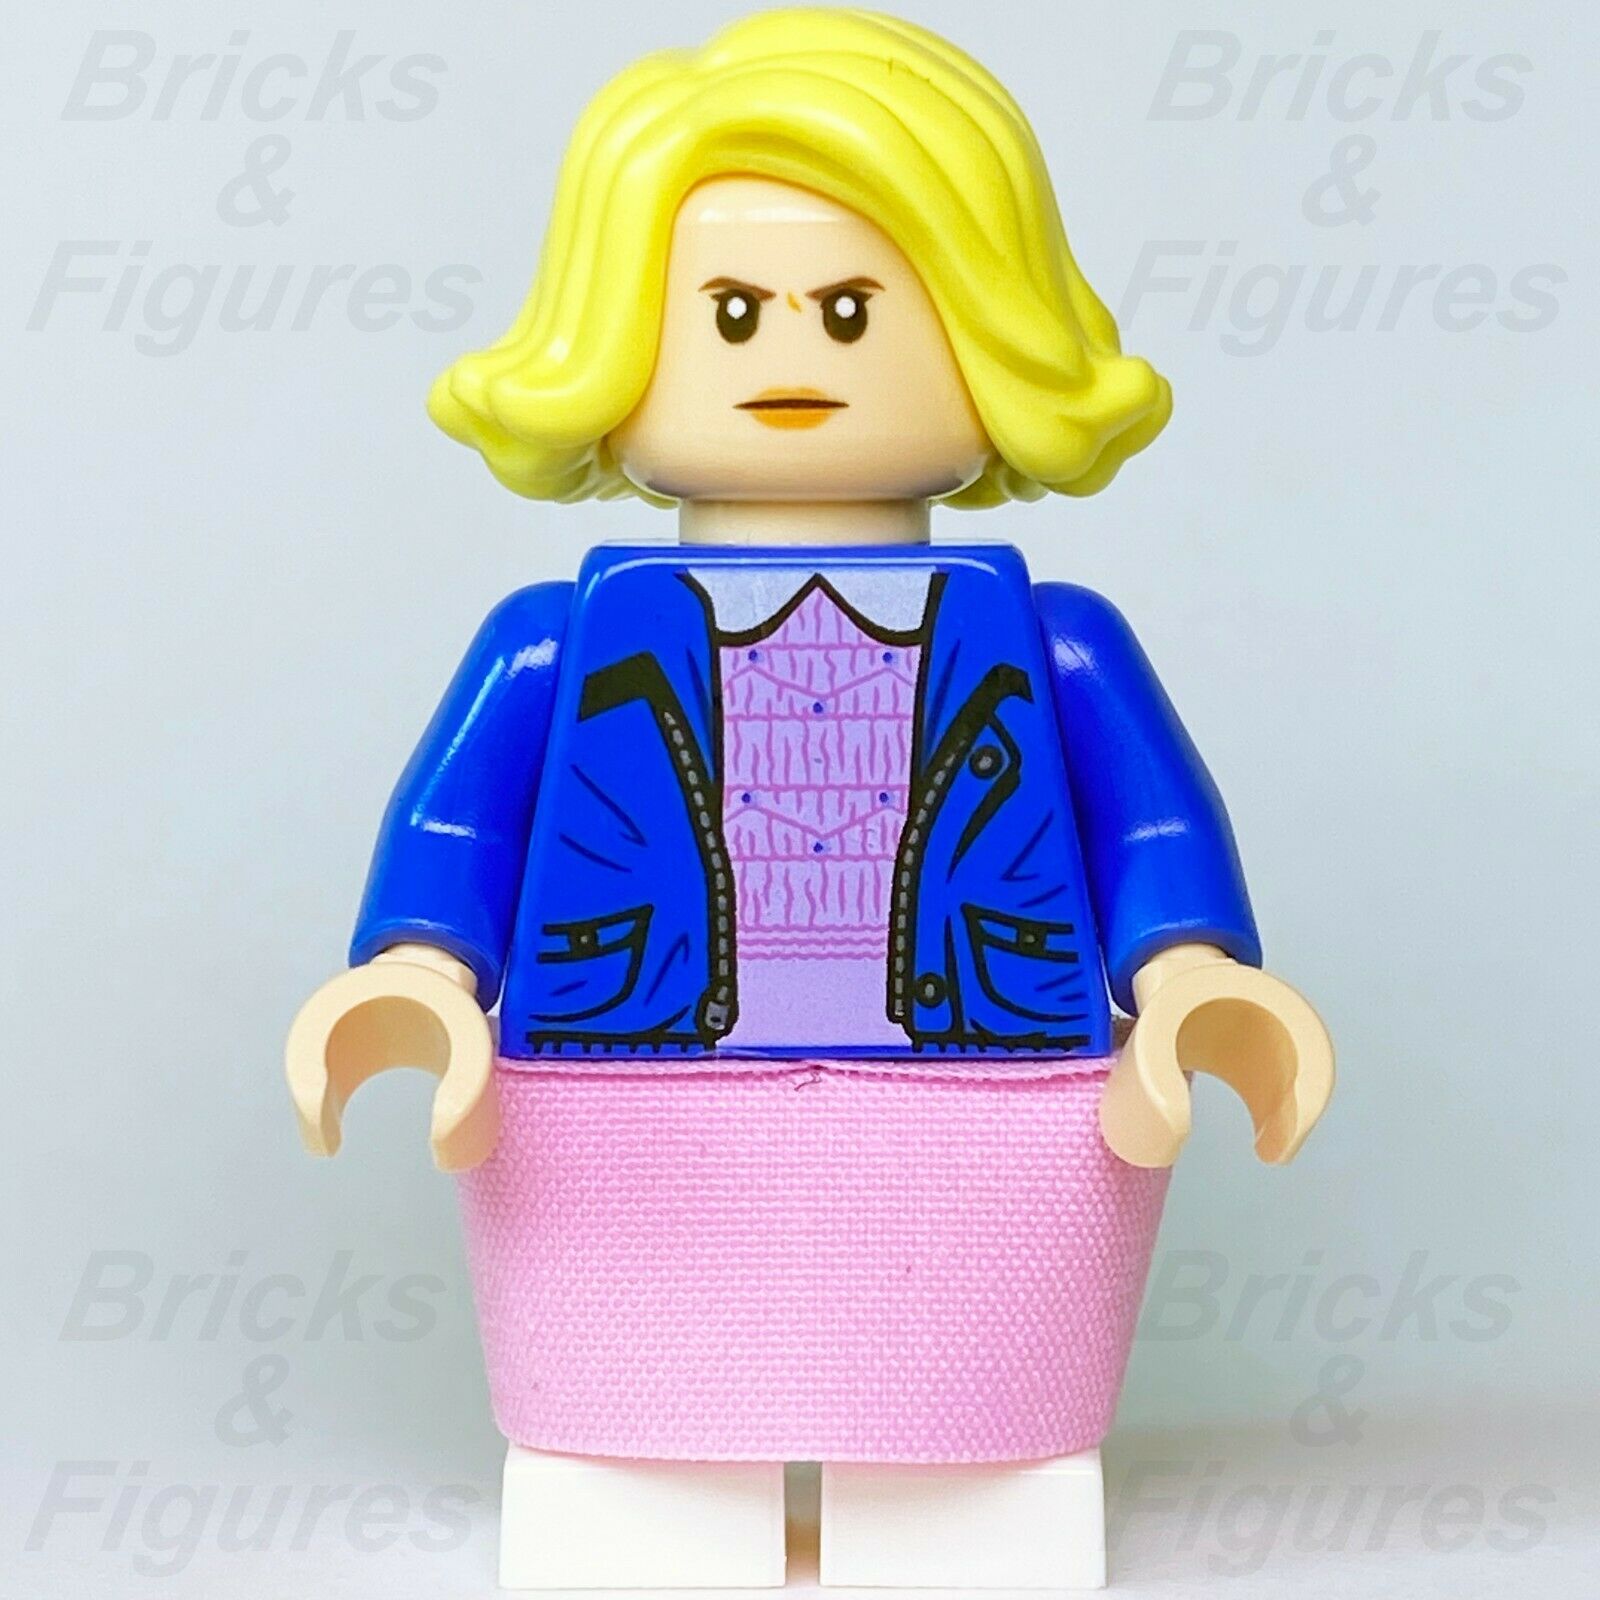 New Stranger Things LEGO Eleven Netflix TV Series Minifigure from set 75810 - Bricks & Figures